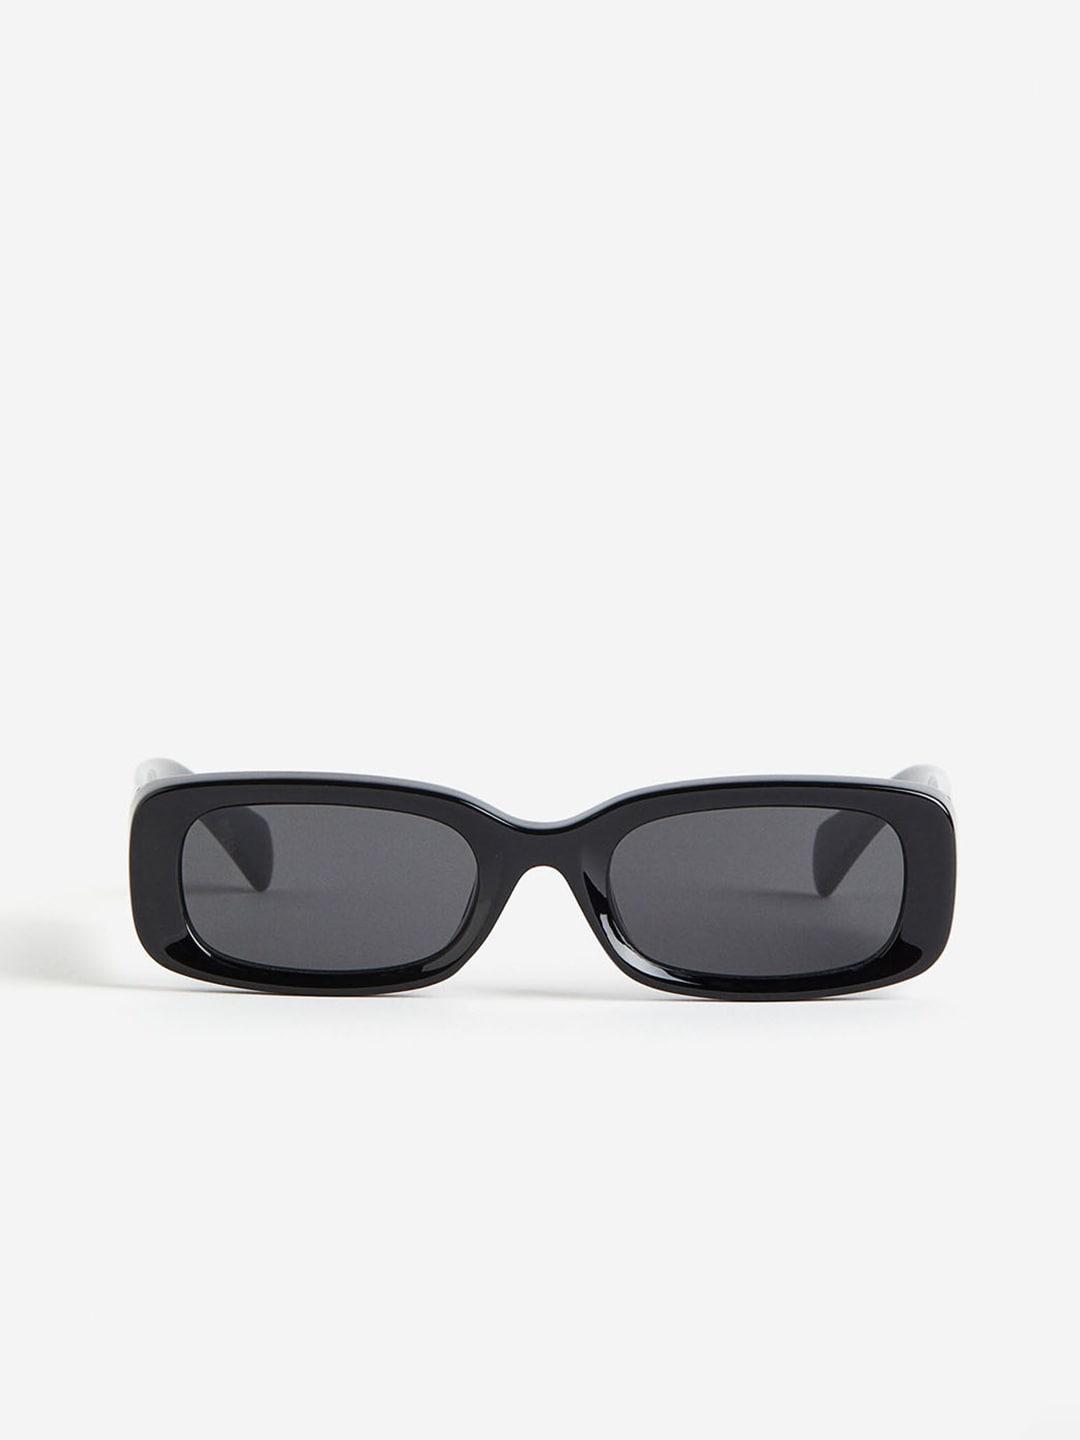 H&M Women UV Protected Square Sunglasses 1226714001